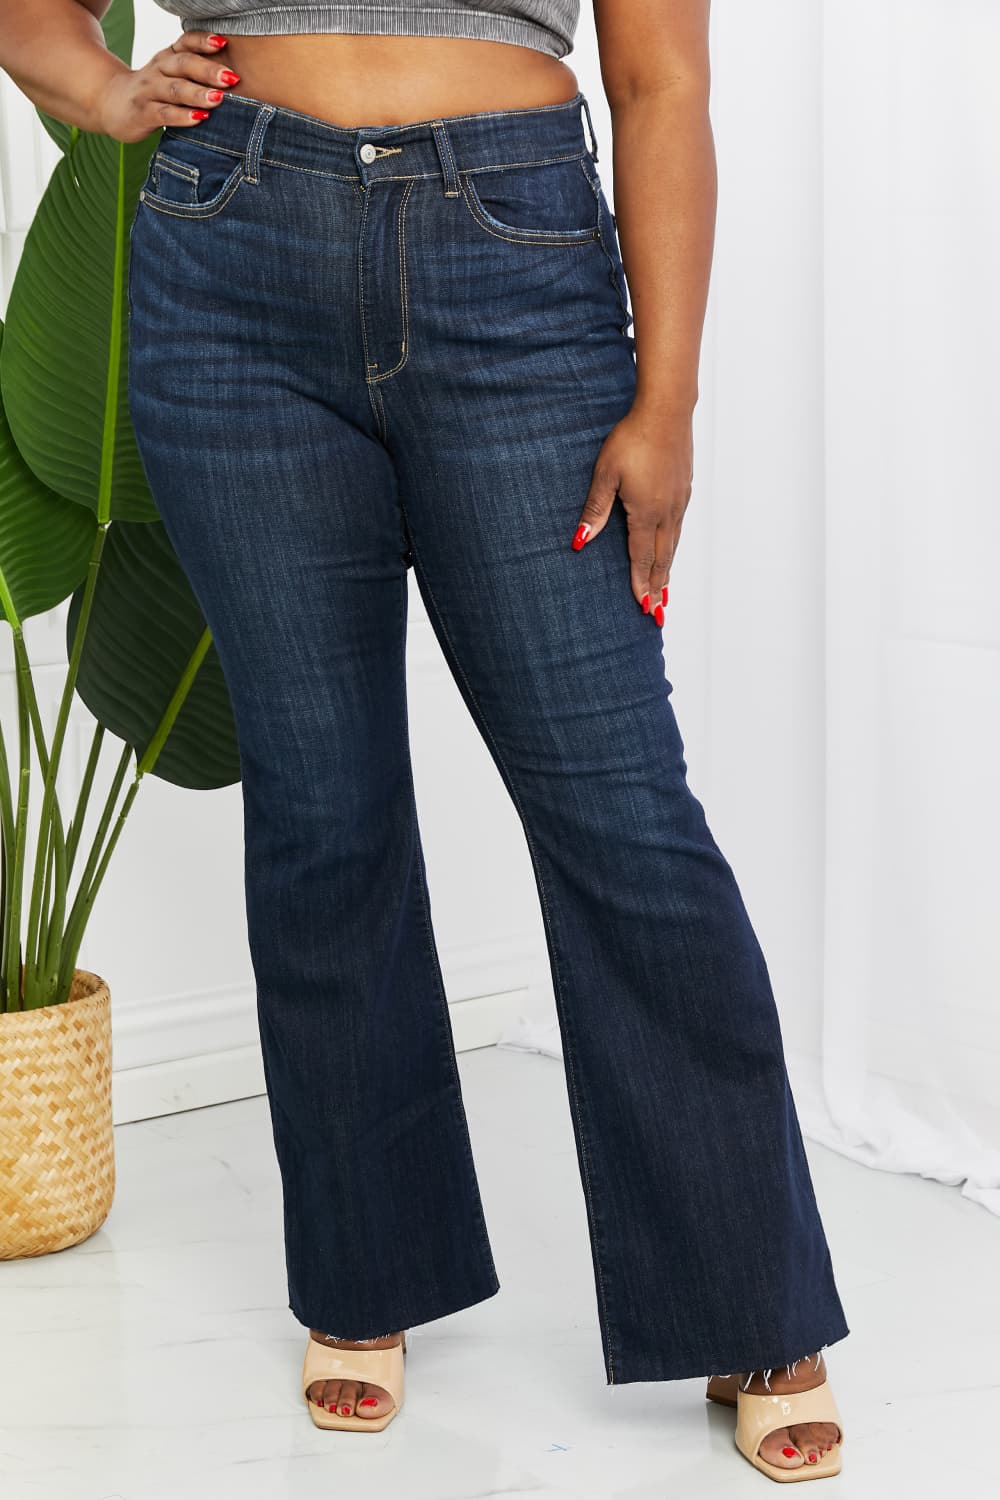 Judy Blue Denim Mid Rise Flare Jeans